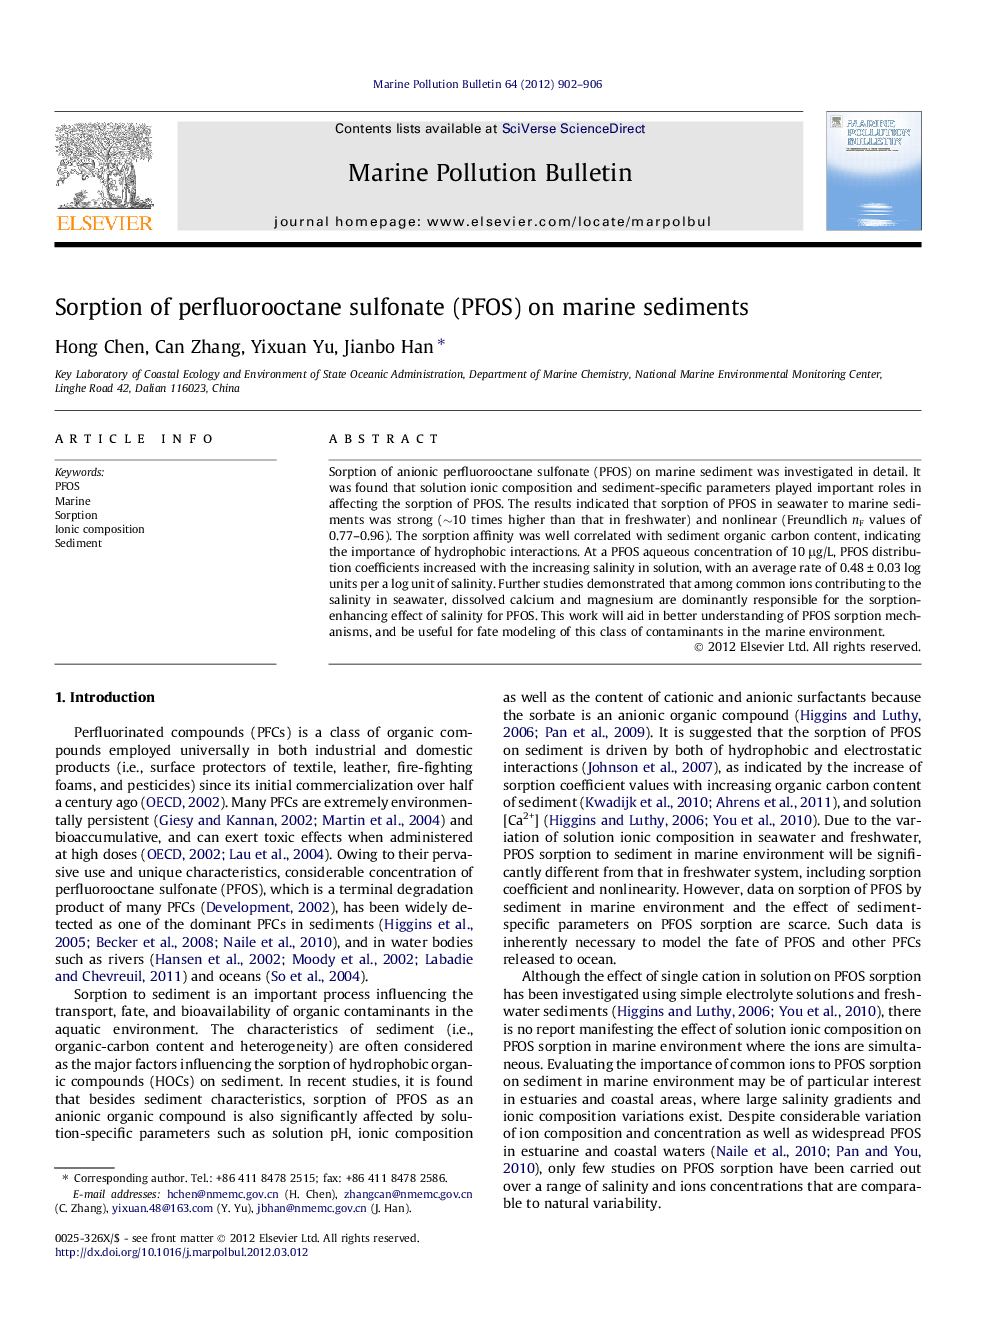 Sorption of perfluorooctane sulfonate (PFOS) on marine sediments